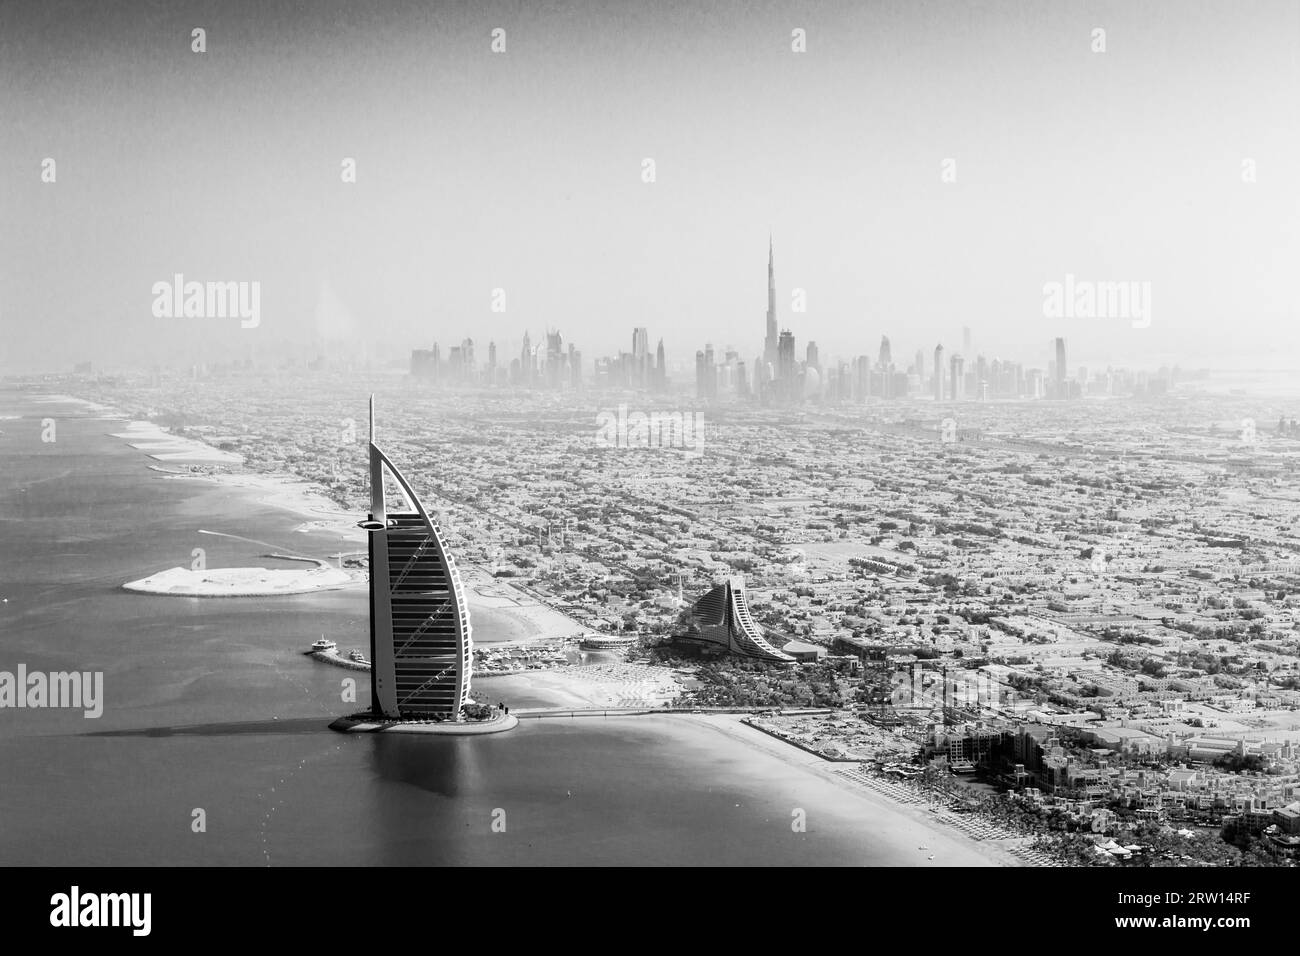 Dubai, United Arab Emirates, October 17, 2014: The famous Burj Al Arab hotel and Dubai skyline taken from a seaplane in black and white Stock Photo